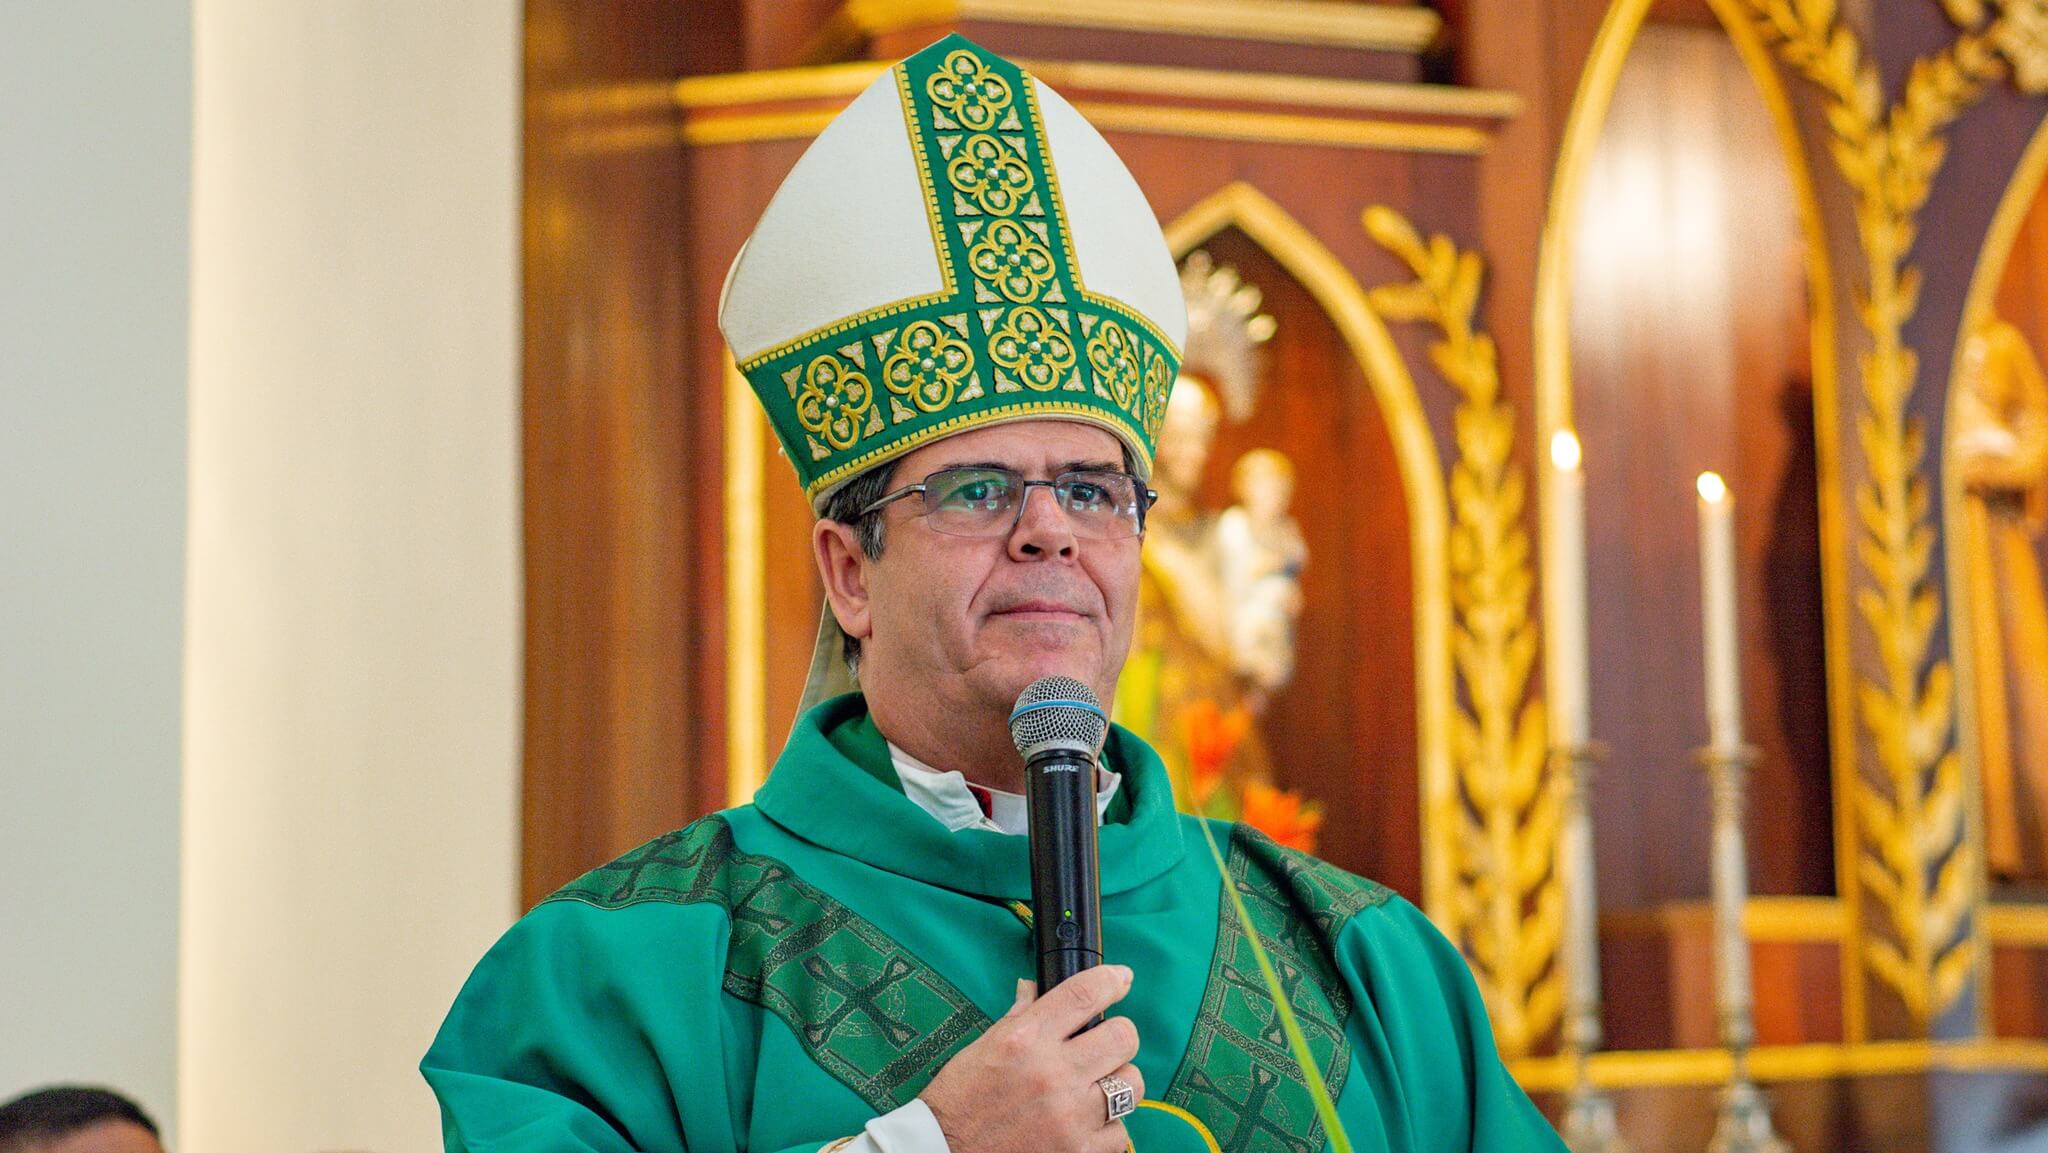 Arquidiocese de Maceió